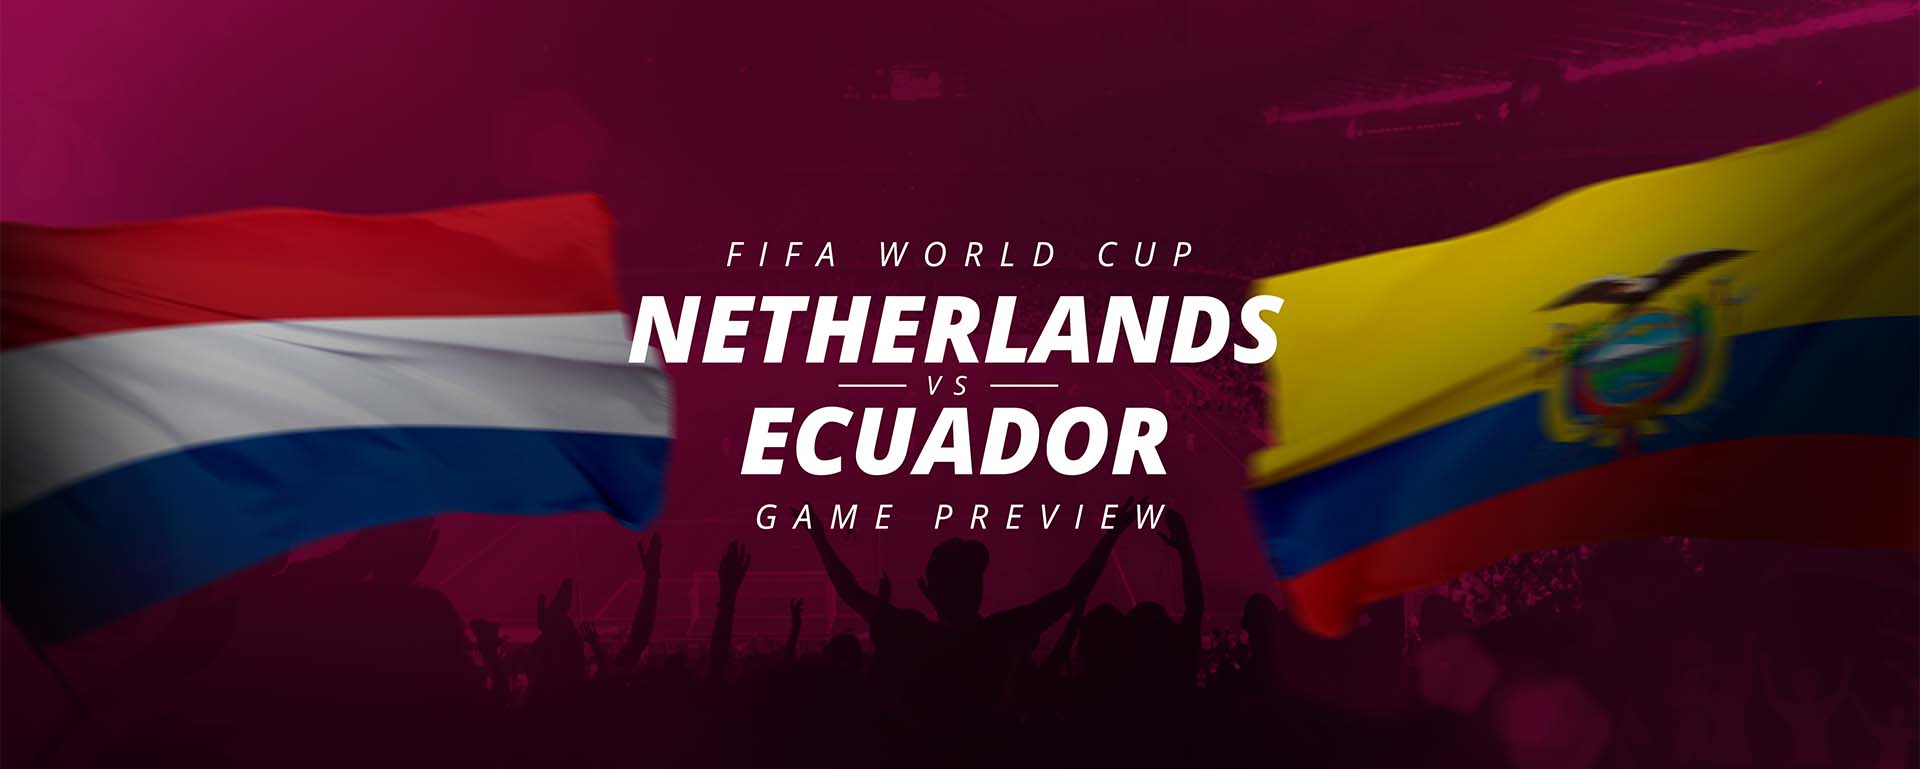 FIFA WORLD CUP: NETHERLANDS V ECUADOR – GAME PREVIEW